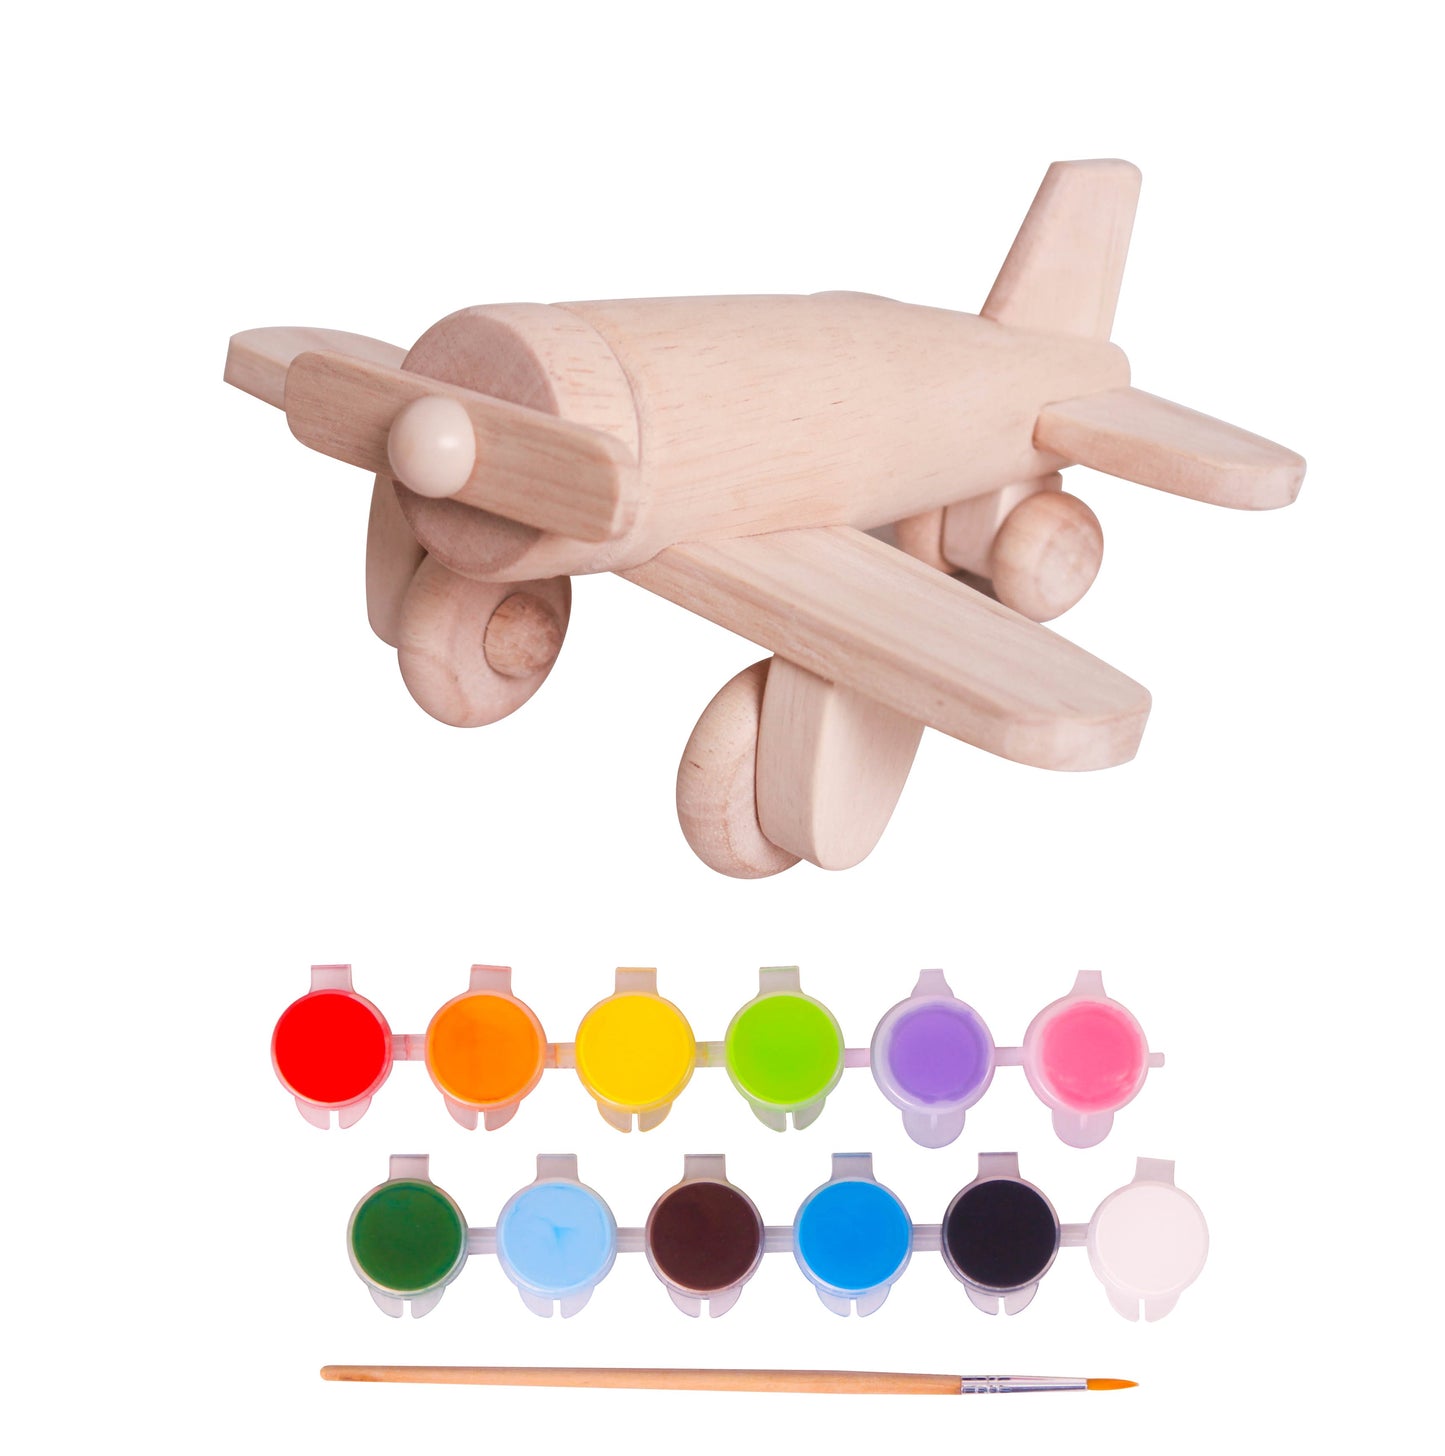 The Art Series - Design: Paint an Airplane - WERONE